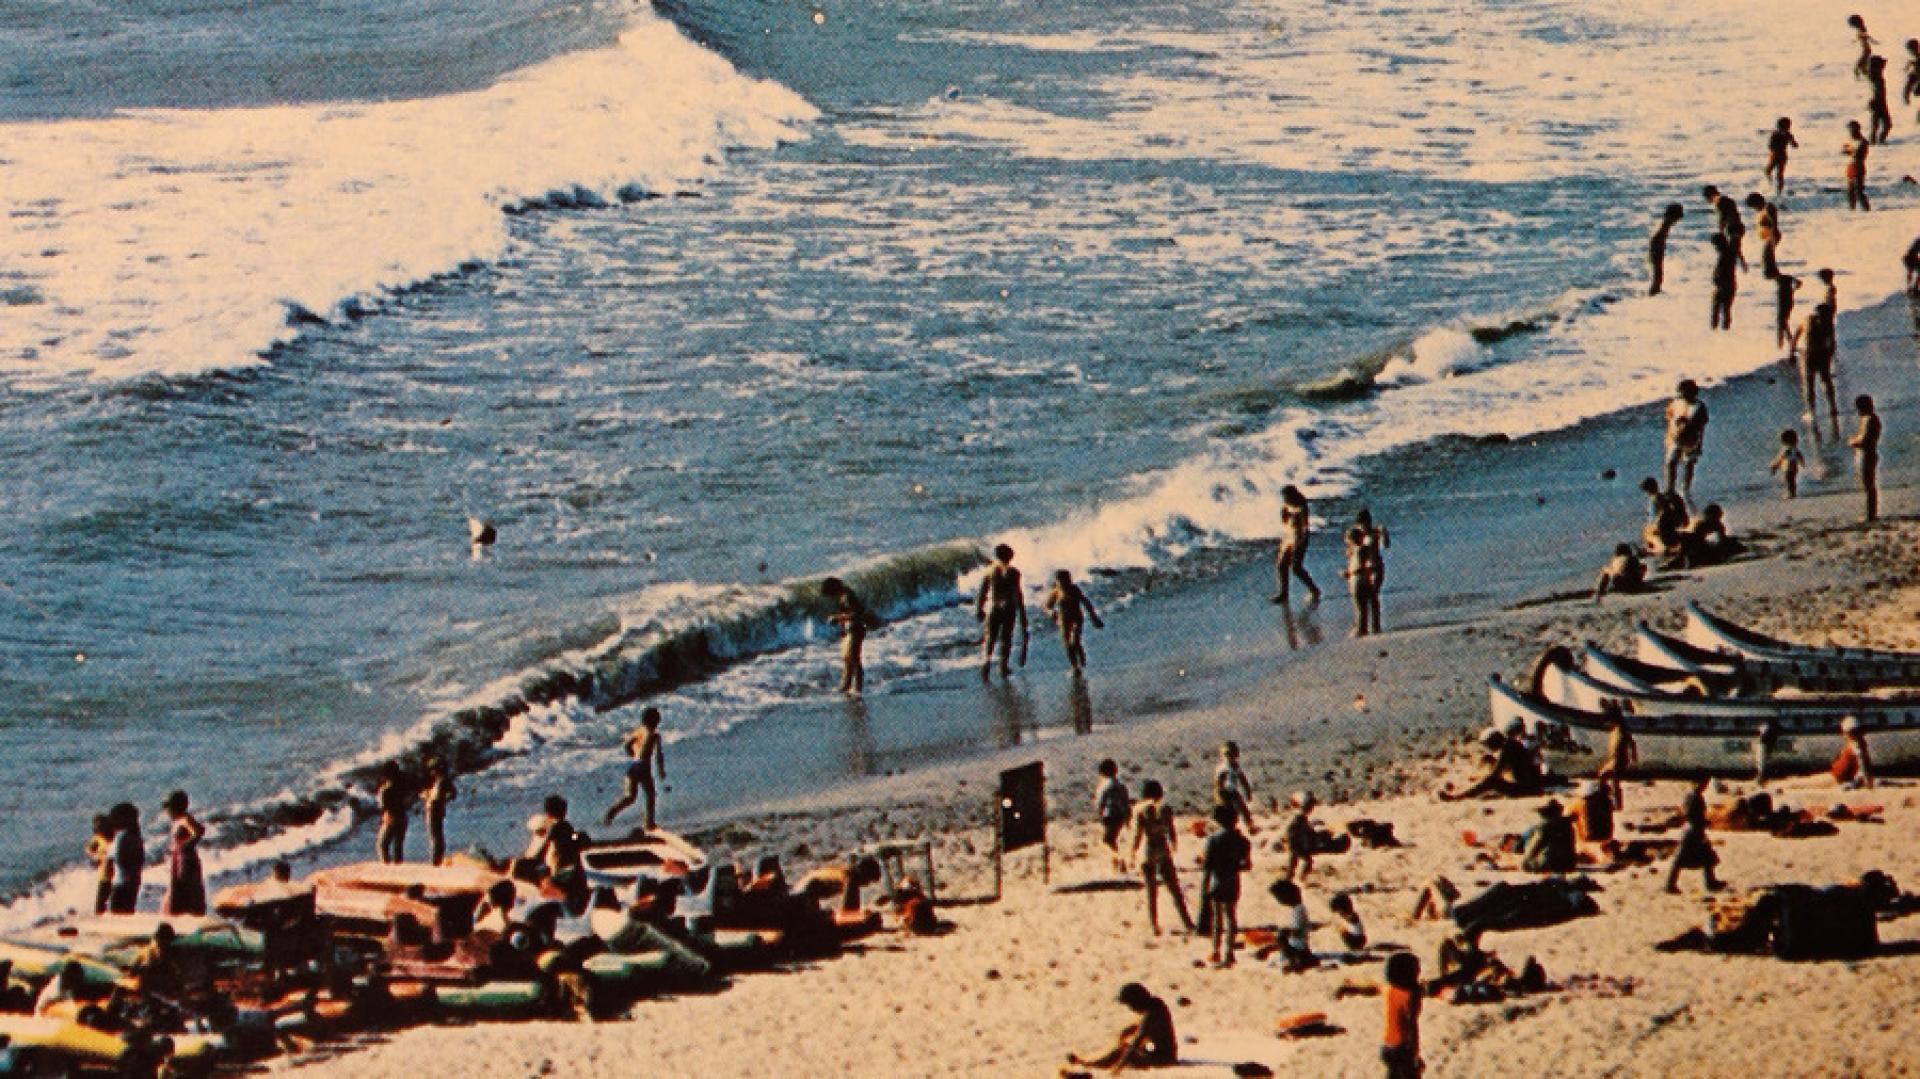 Venus resort beach. | Postcard author’s collection, photo by Hedy Löffler, 1980